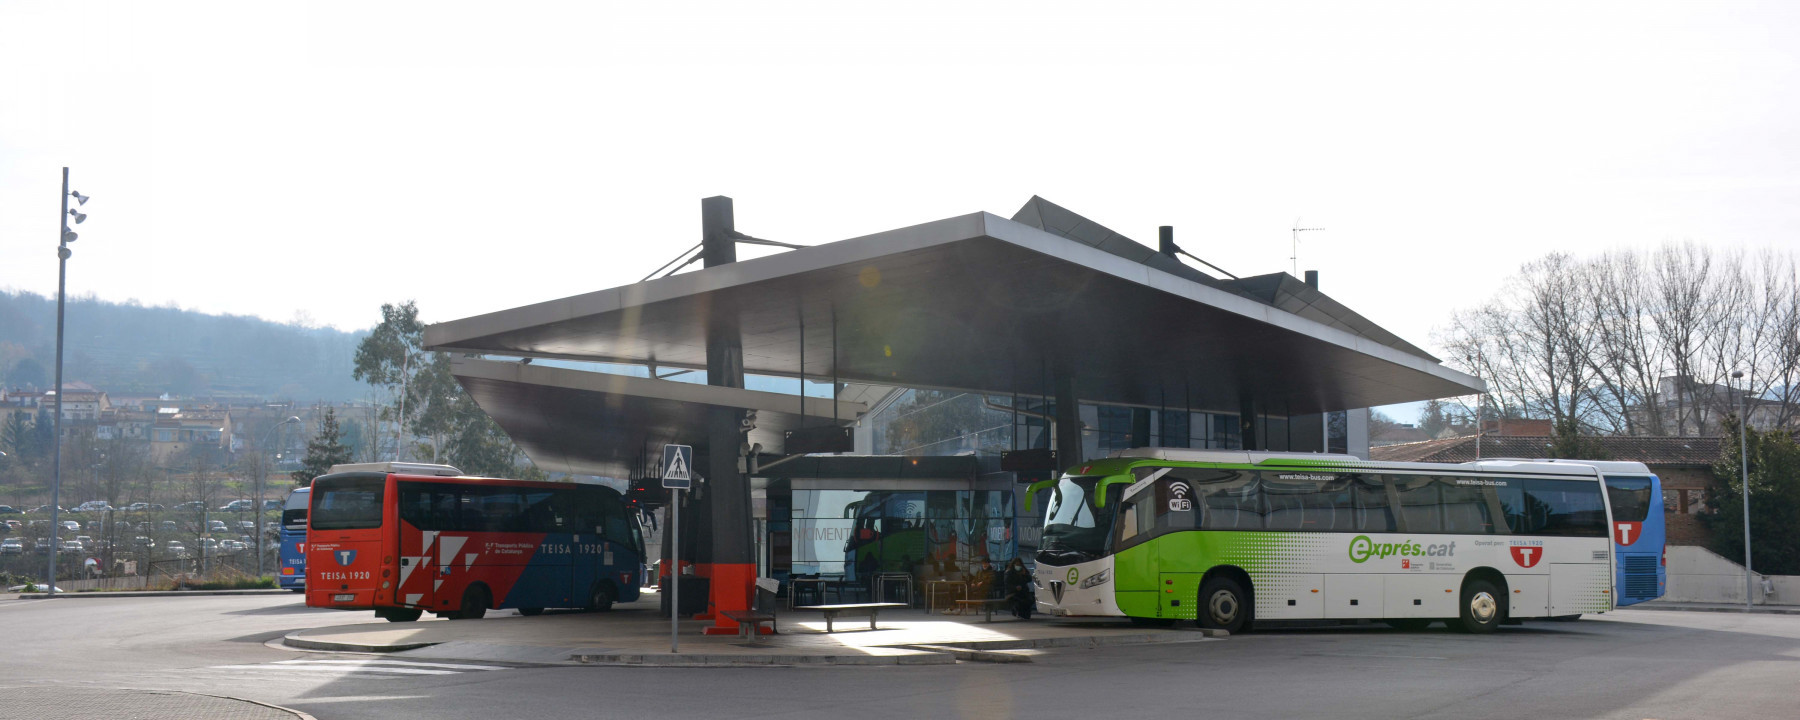 Autobus_1